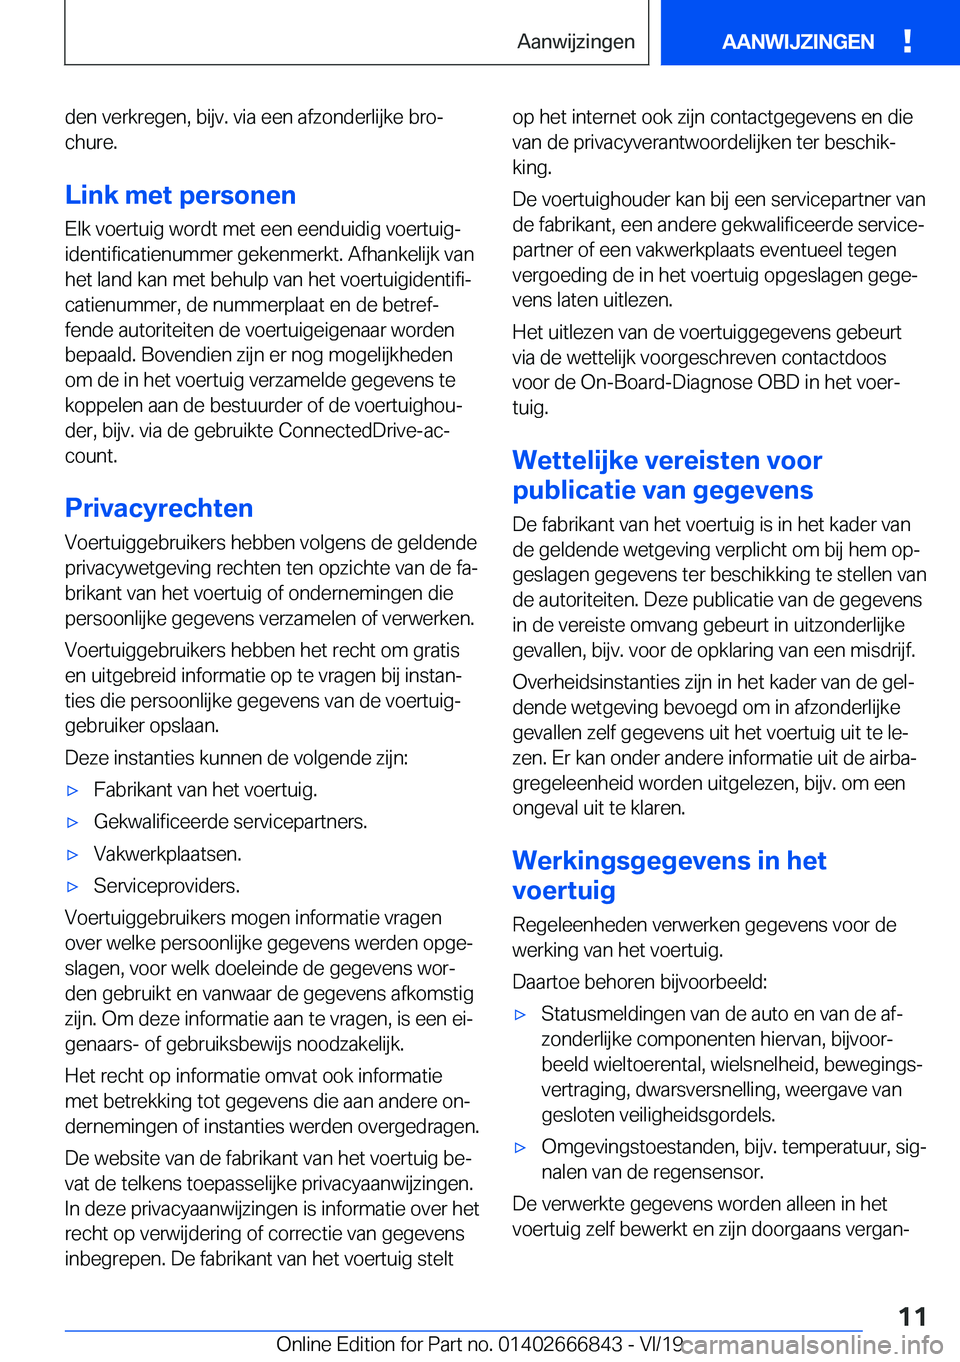 BMW X3 M 2020  Instructieboekjes (in Dutch) �d�e�n��v�e�r�k�r�e�g�e�n�,��b�i�j�v�.��v�i�a��e�e�n��a�f�z�o�n�d�e�r�l�i�j�k�e��b�r�oj
�c�h�u�r�e�.
�L�i�n�k��m�e�t��p�e�r�s�o�n�e�n�E�l�k��v�o�e�r�t�u�i�g��w�o�r�d�t��m�e�t��e�e�n��e�e